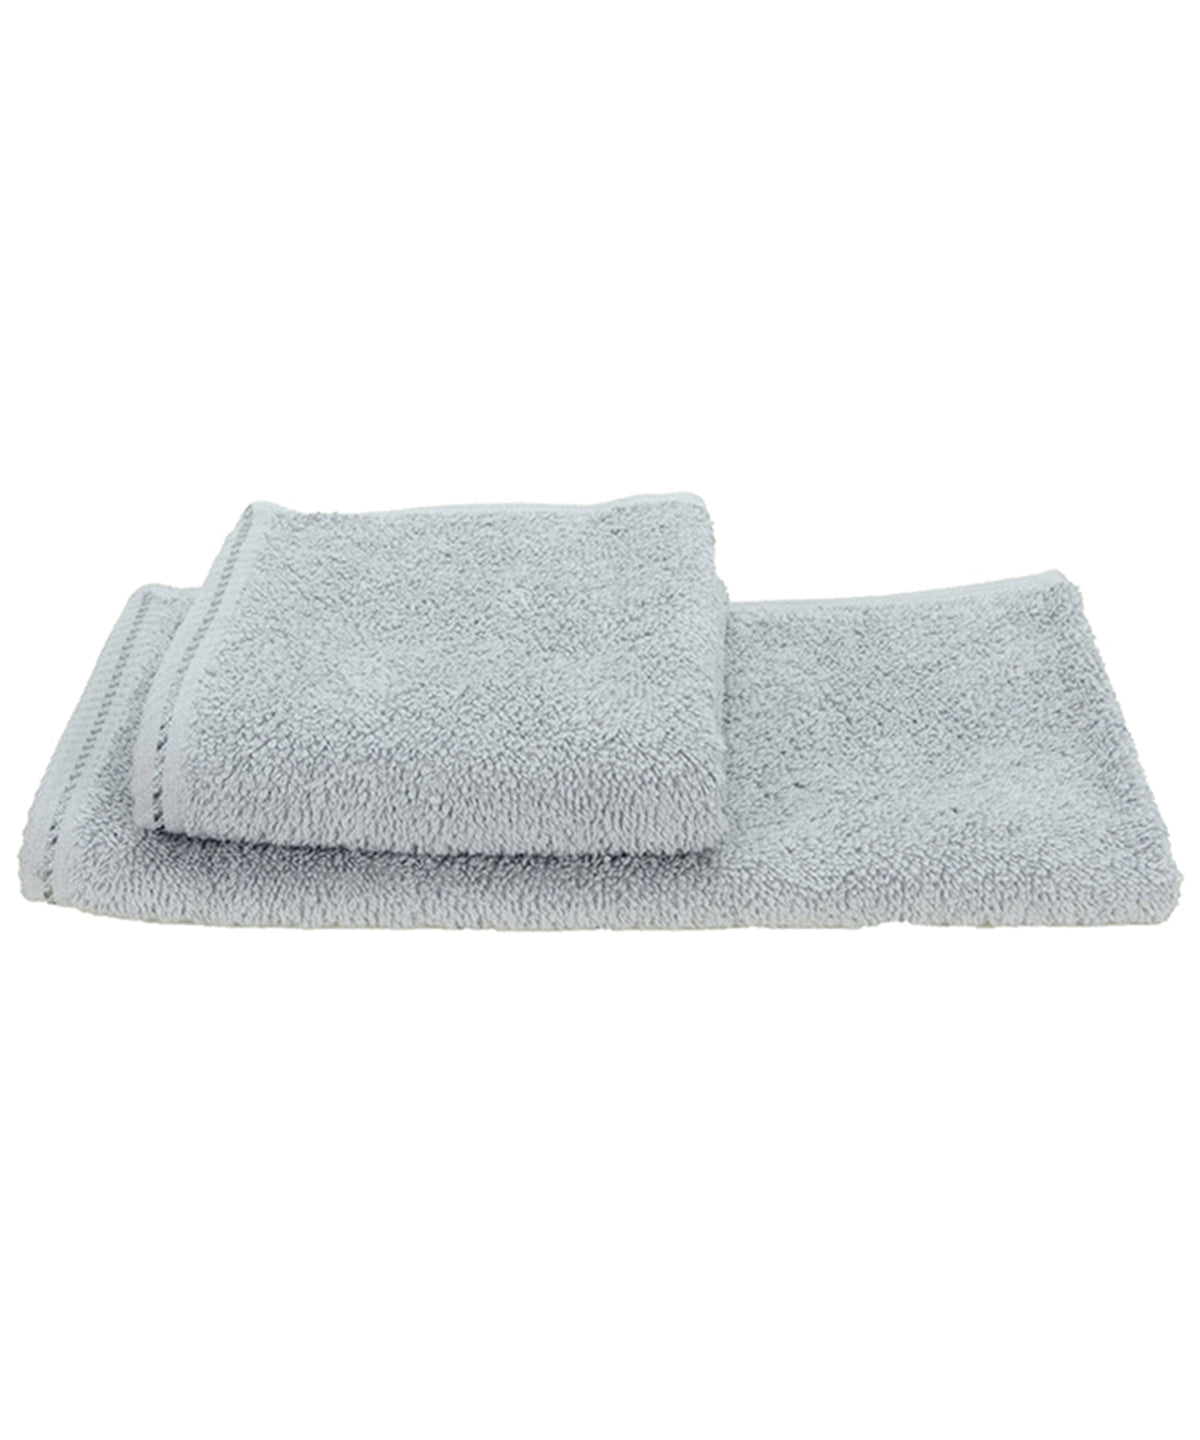 Personalised Towels - Light Grey A&R Towels ARTG® Guest towel